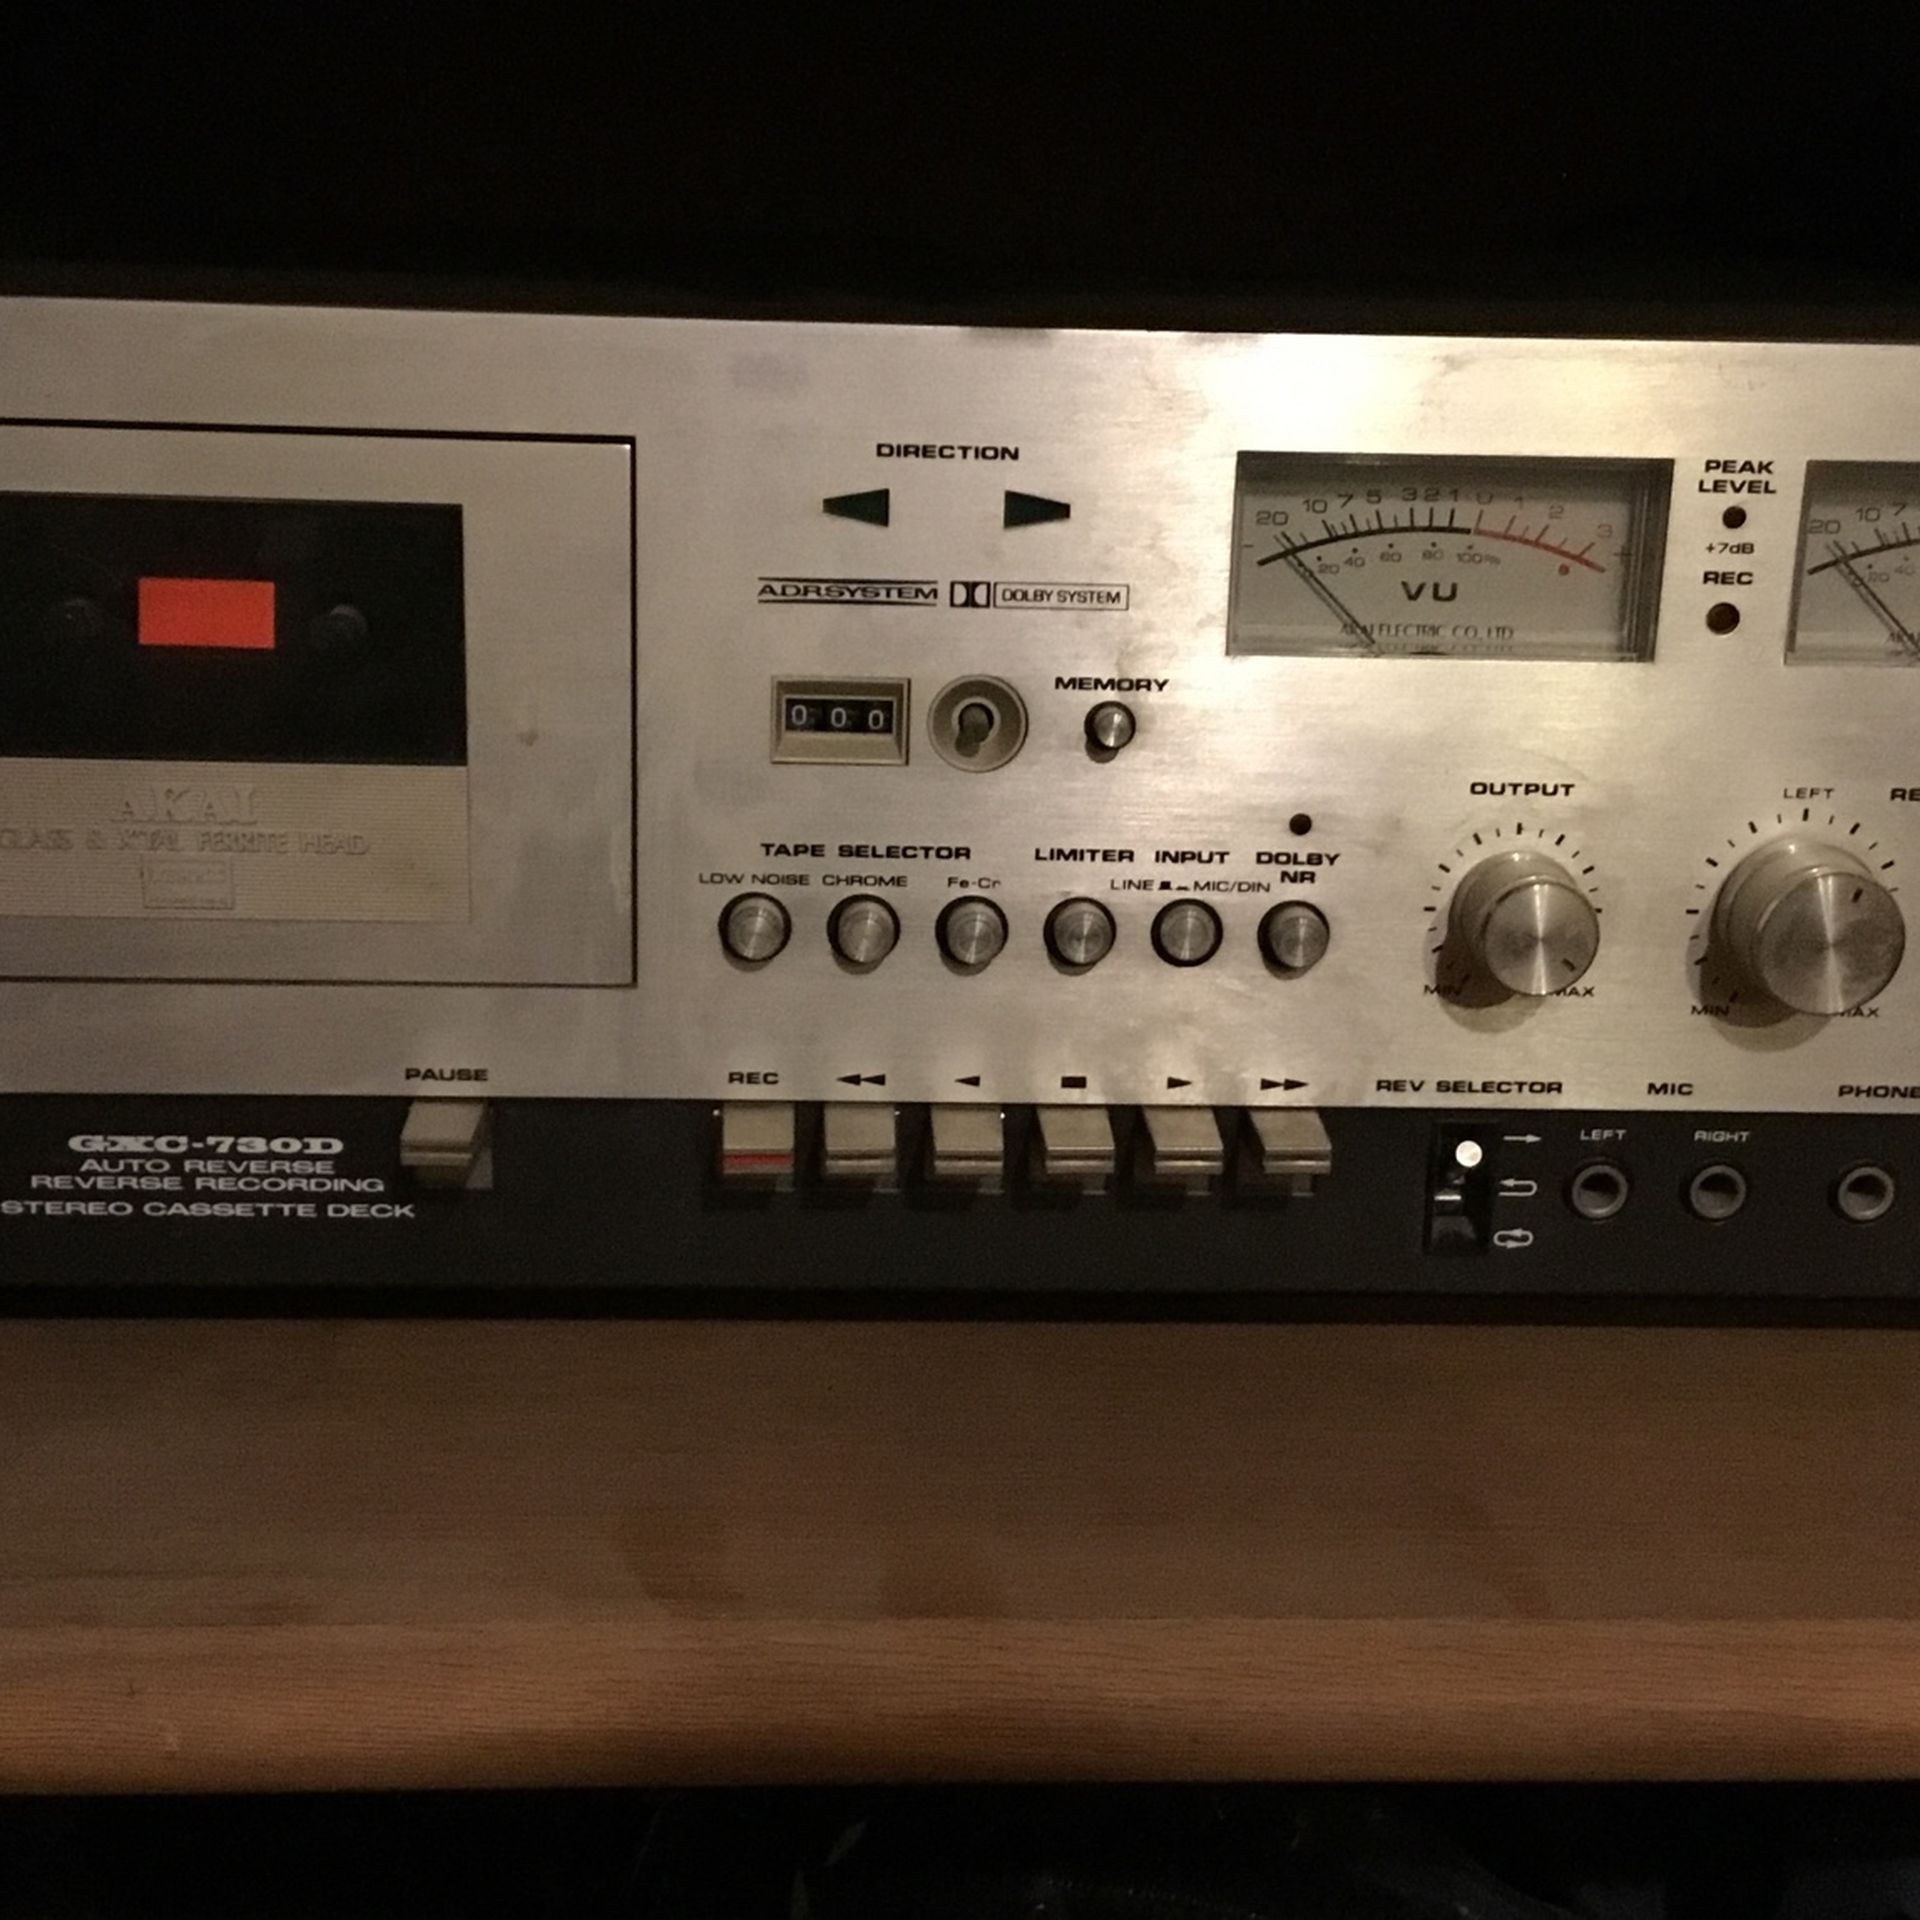 Aka I Gxc-730d Auto Reverse Reverse Recording Cassette Deck